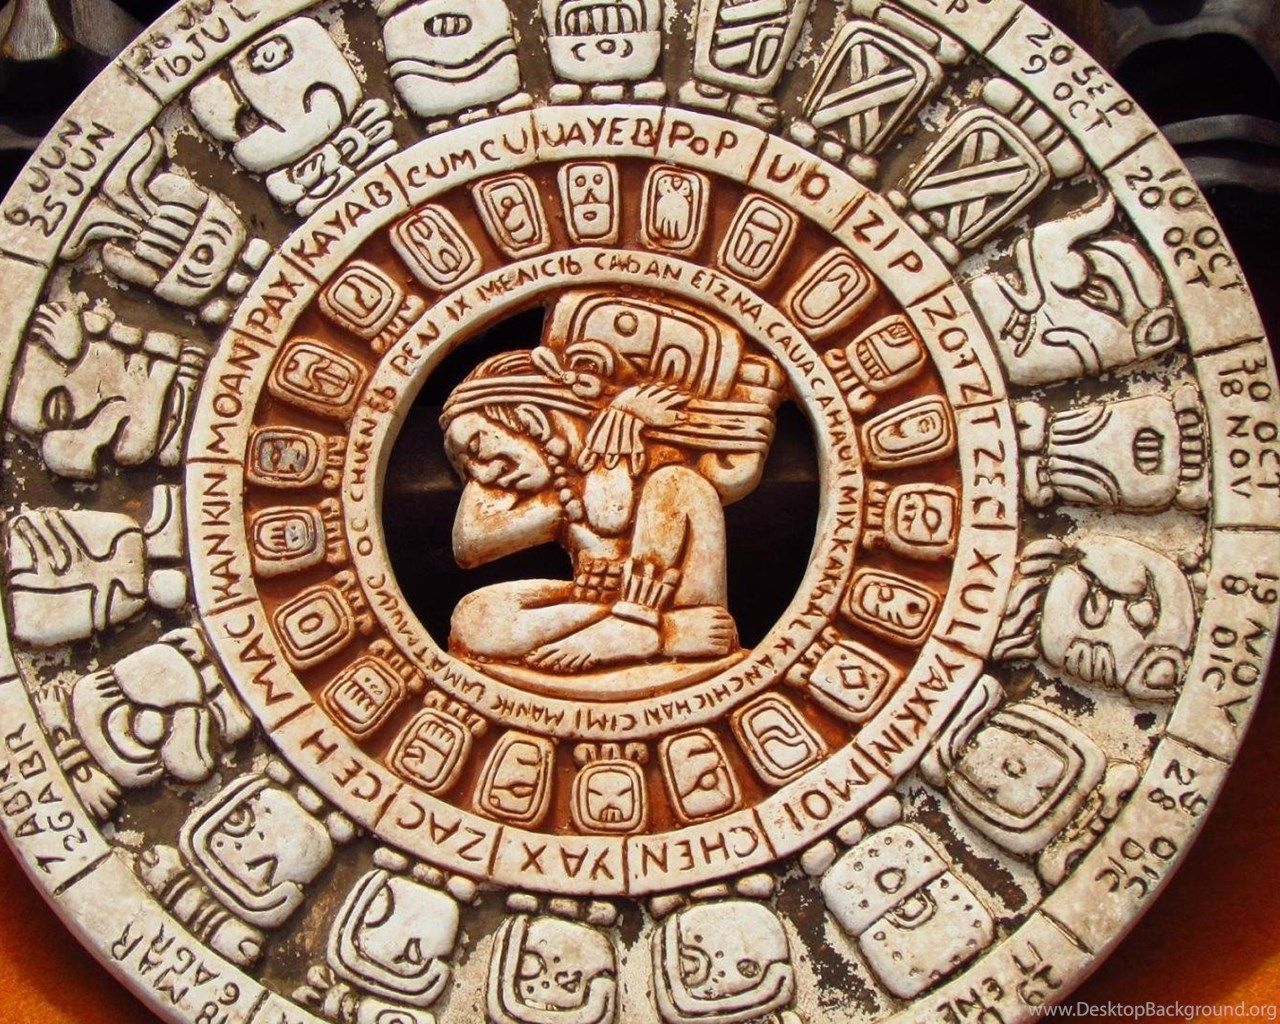 Календарь майя персонажи. Хааб – Солнечный календарь Майя. Календарь индейцев Майя. Индейцы Майя календарь Цолькин. Календарь ма(й)я.